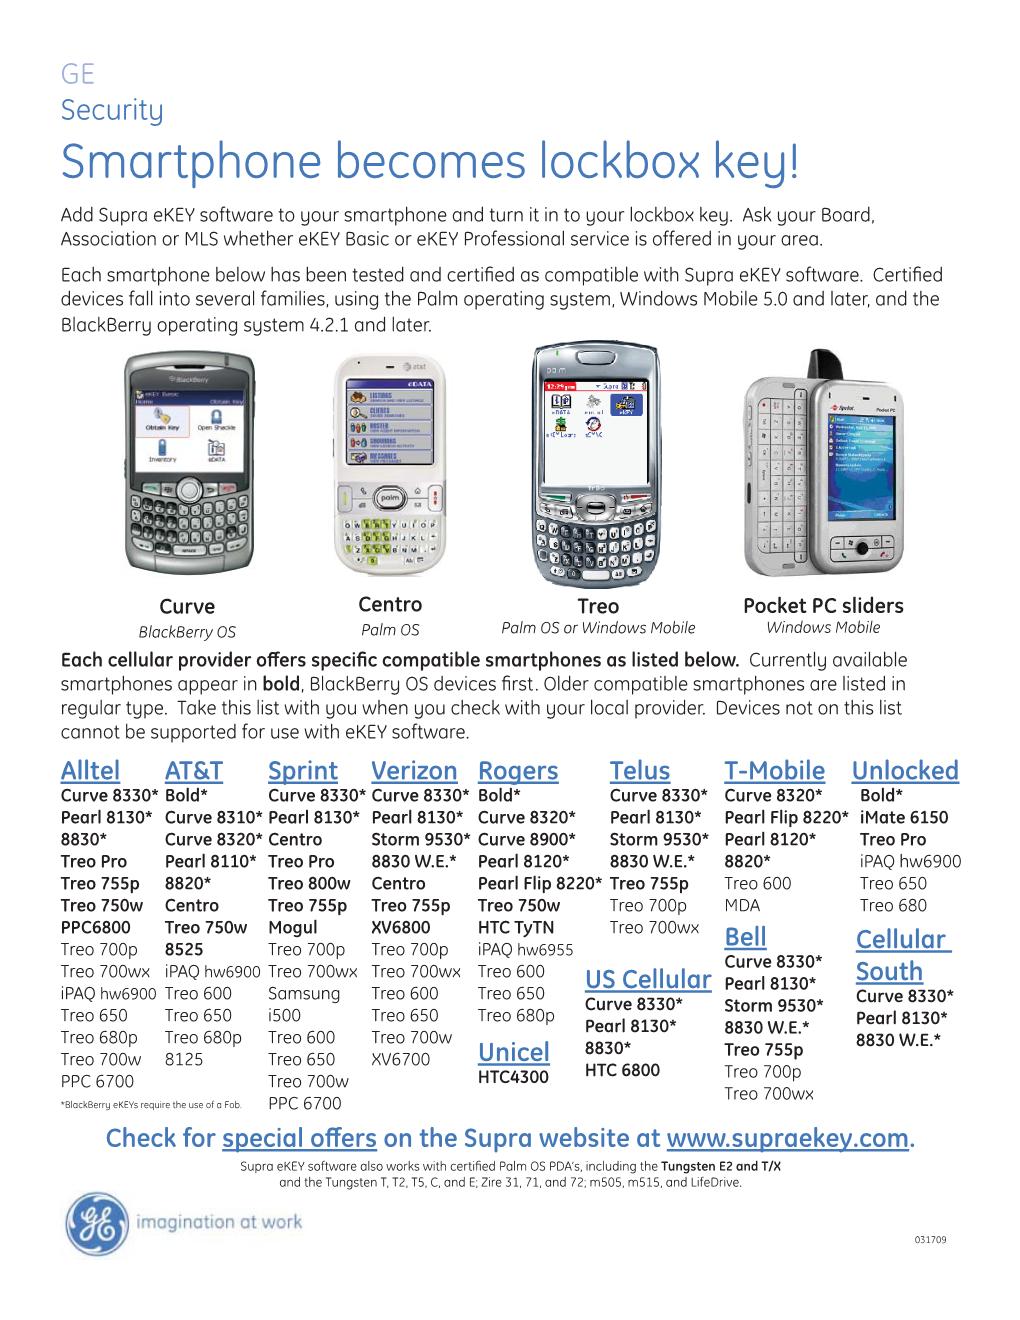 Smartphone Becomes Lockbox Key! Add Supra Ekey Software to Your Smartphone and Turn It in to Your Lockbox Key